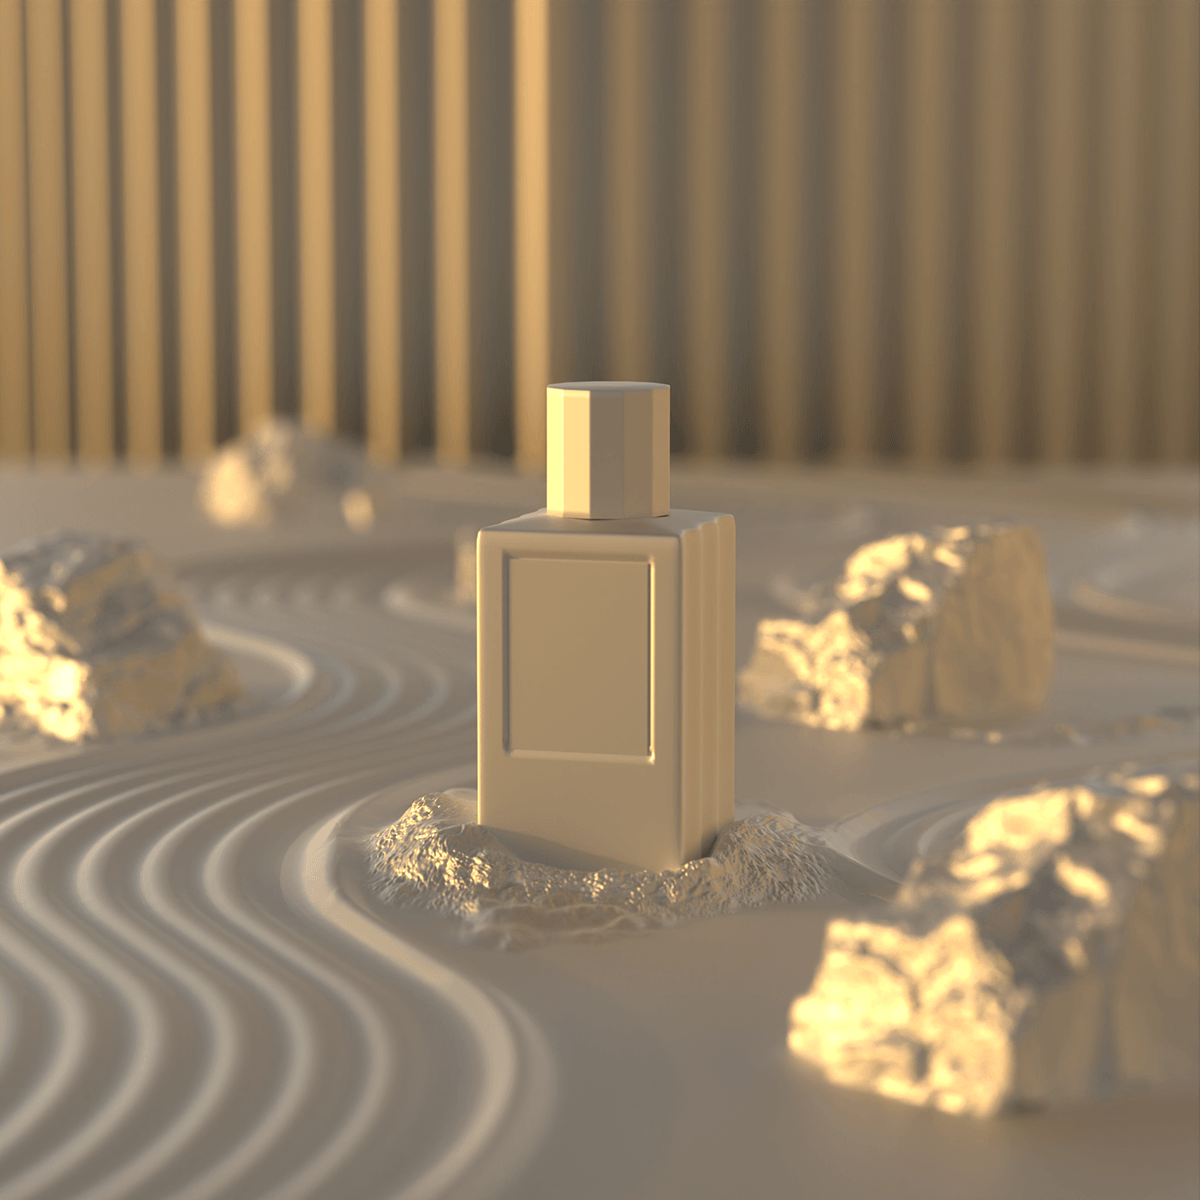 3D modeling Render rendering blender blender 3d perfume Modeling Rendering visualization Private